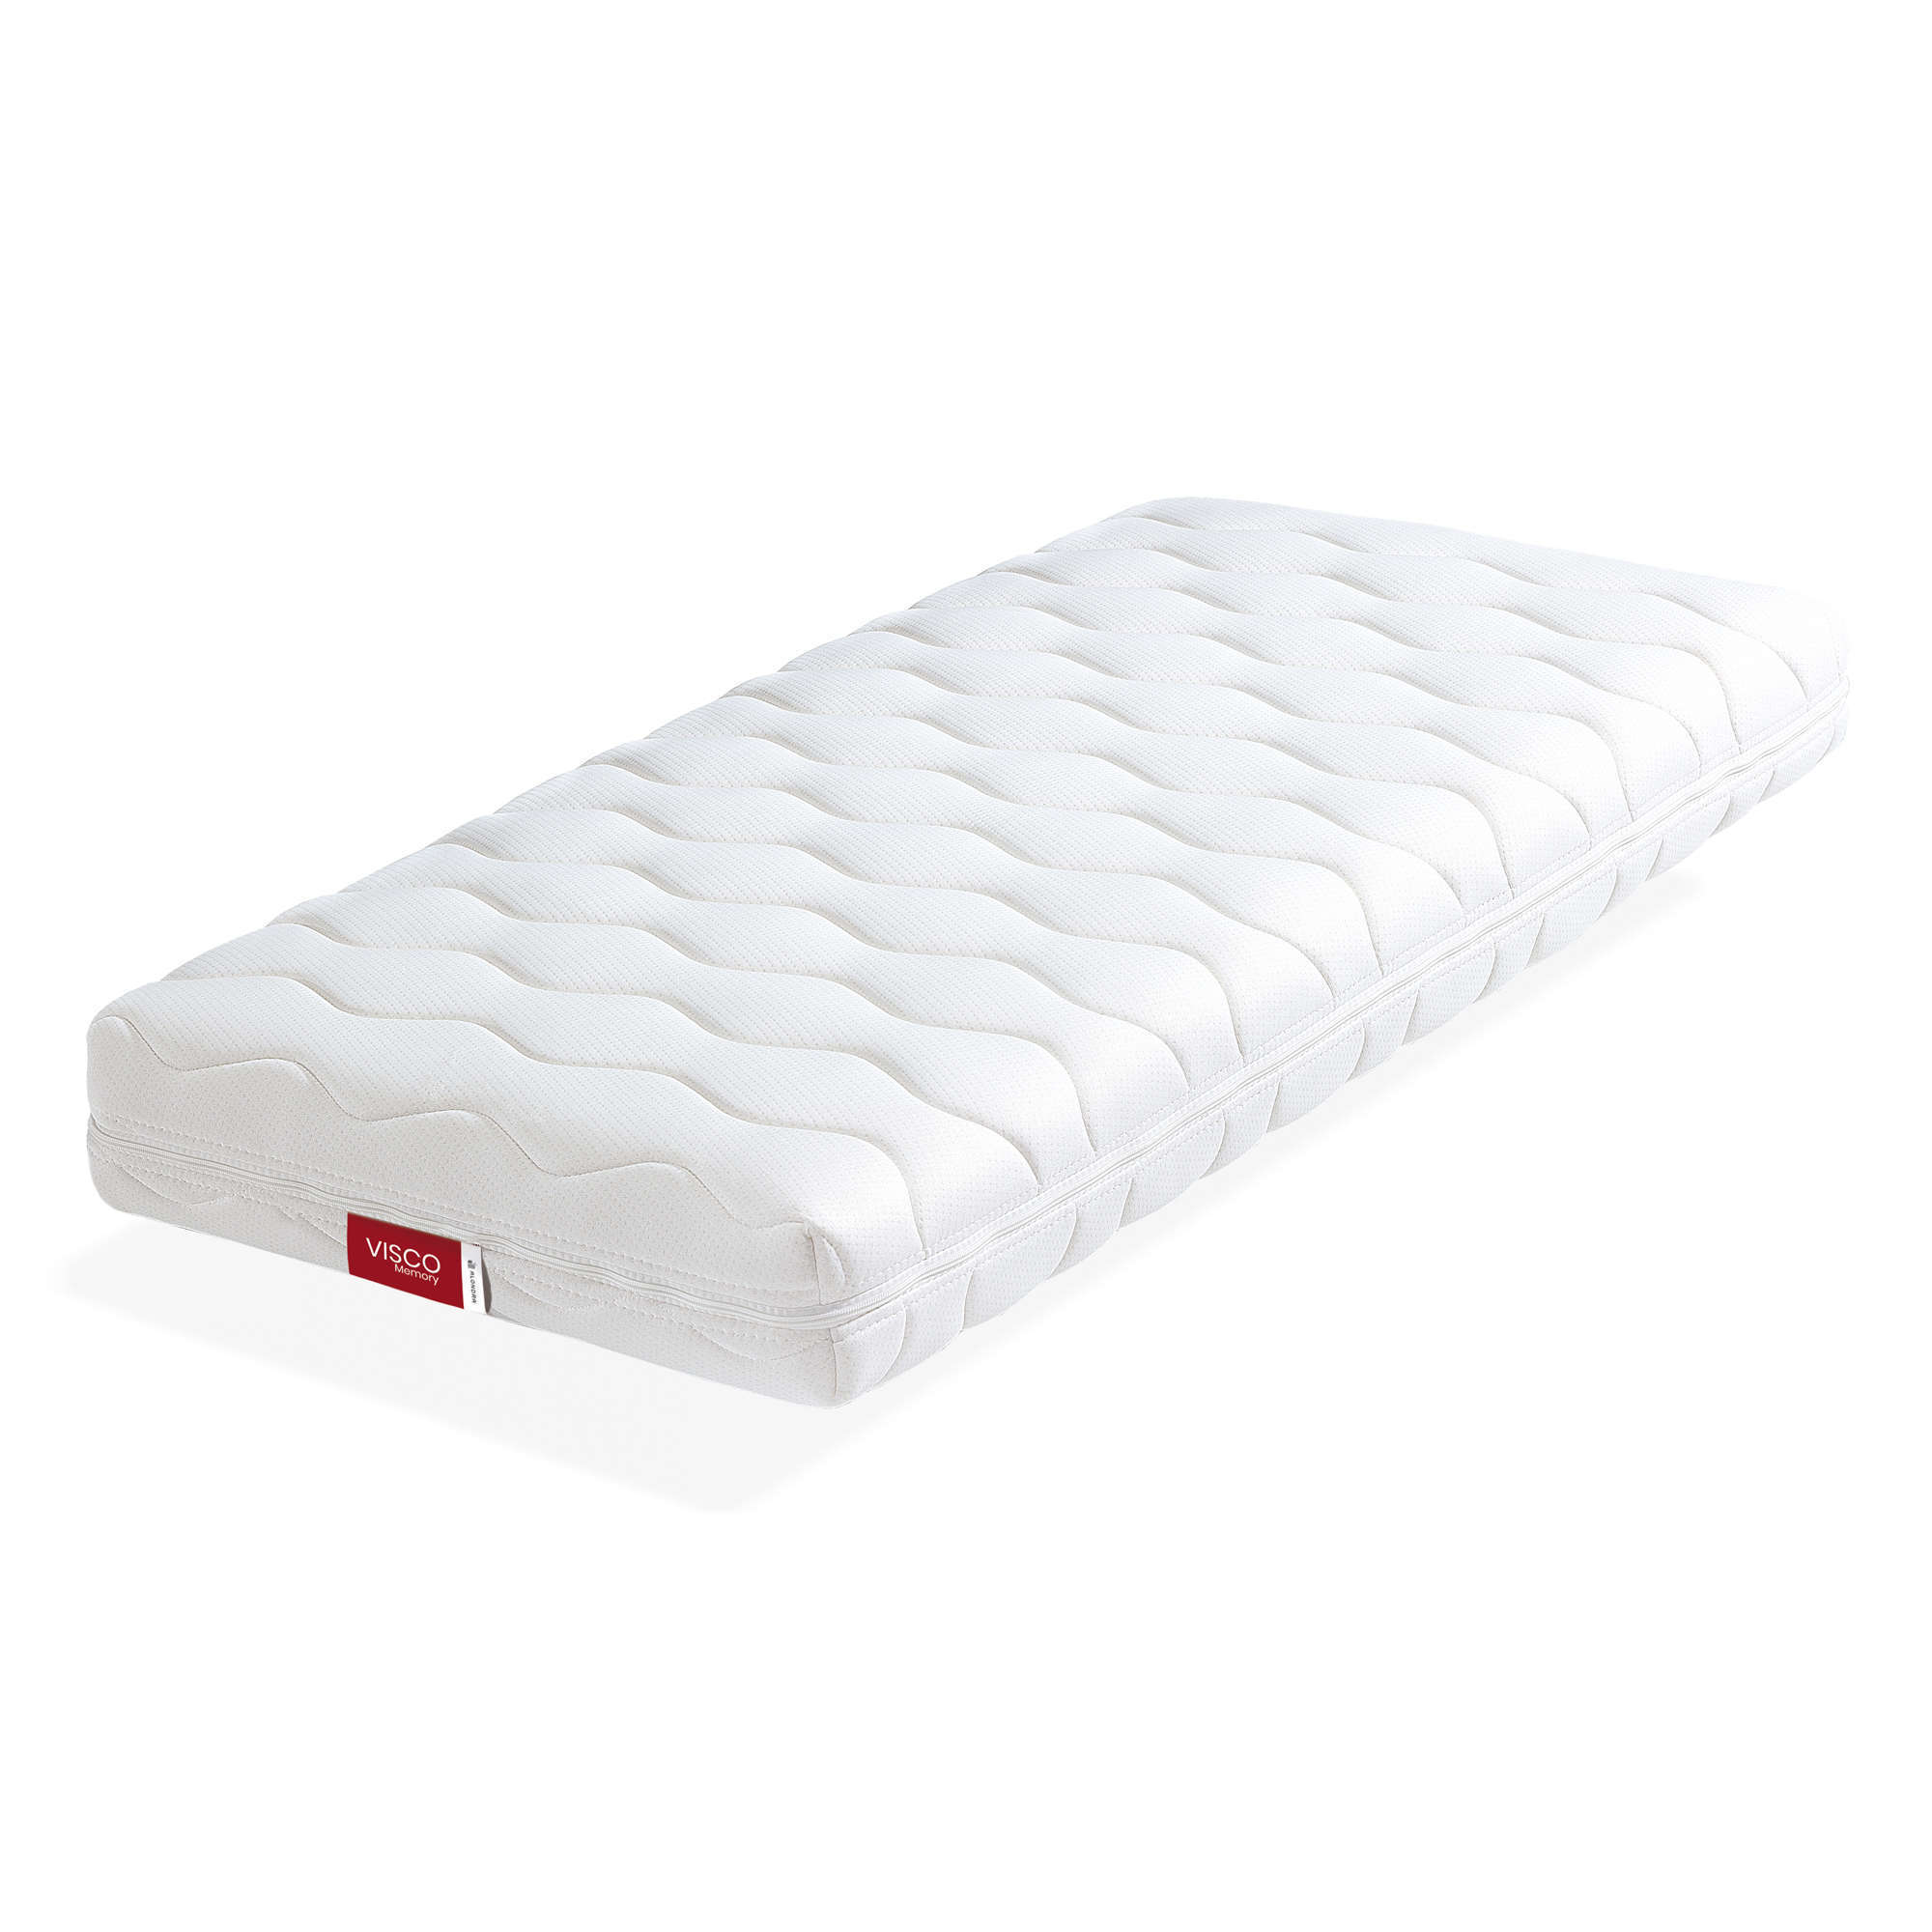 Memory foam mattress for cot 70x140